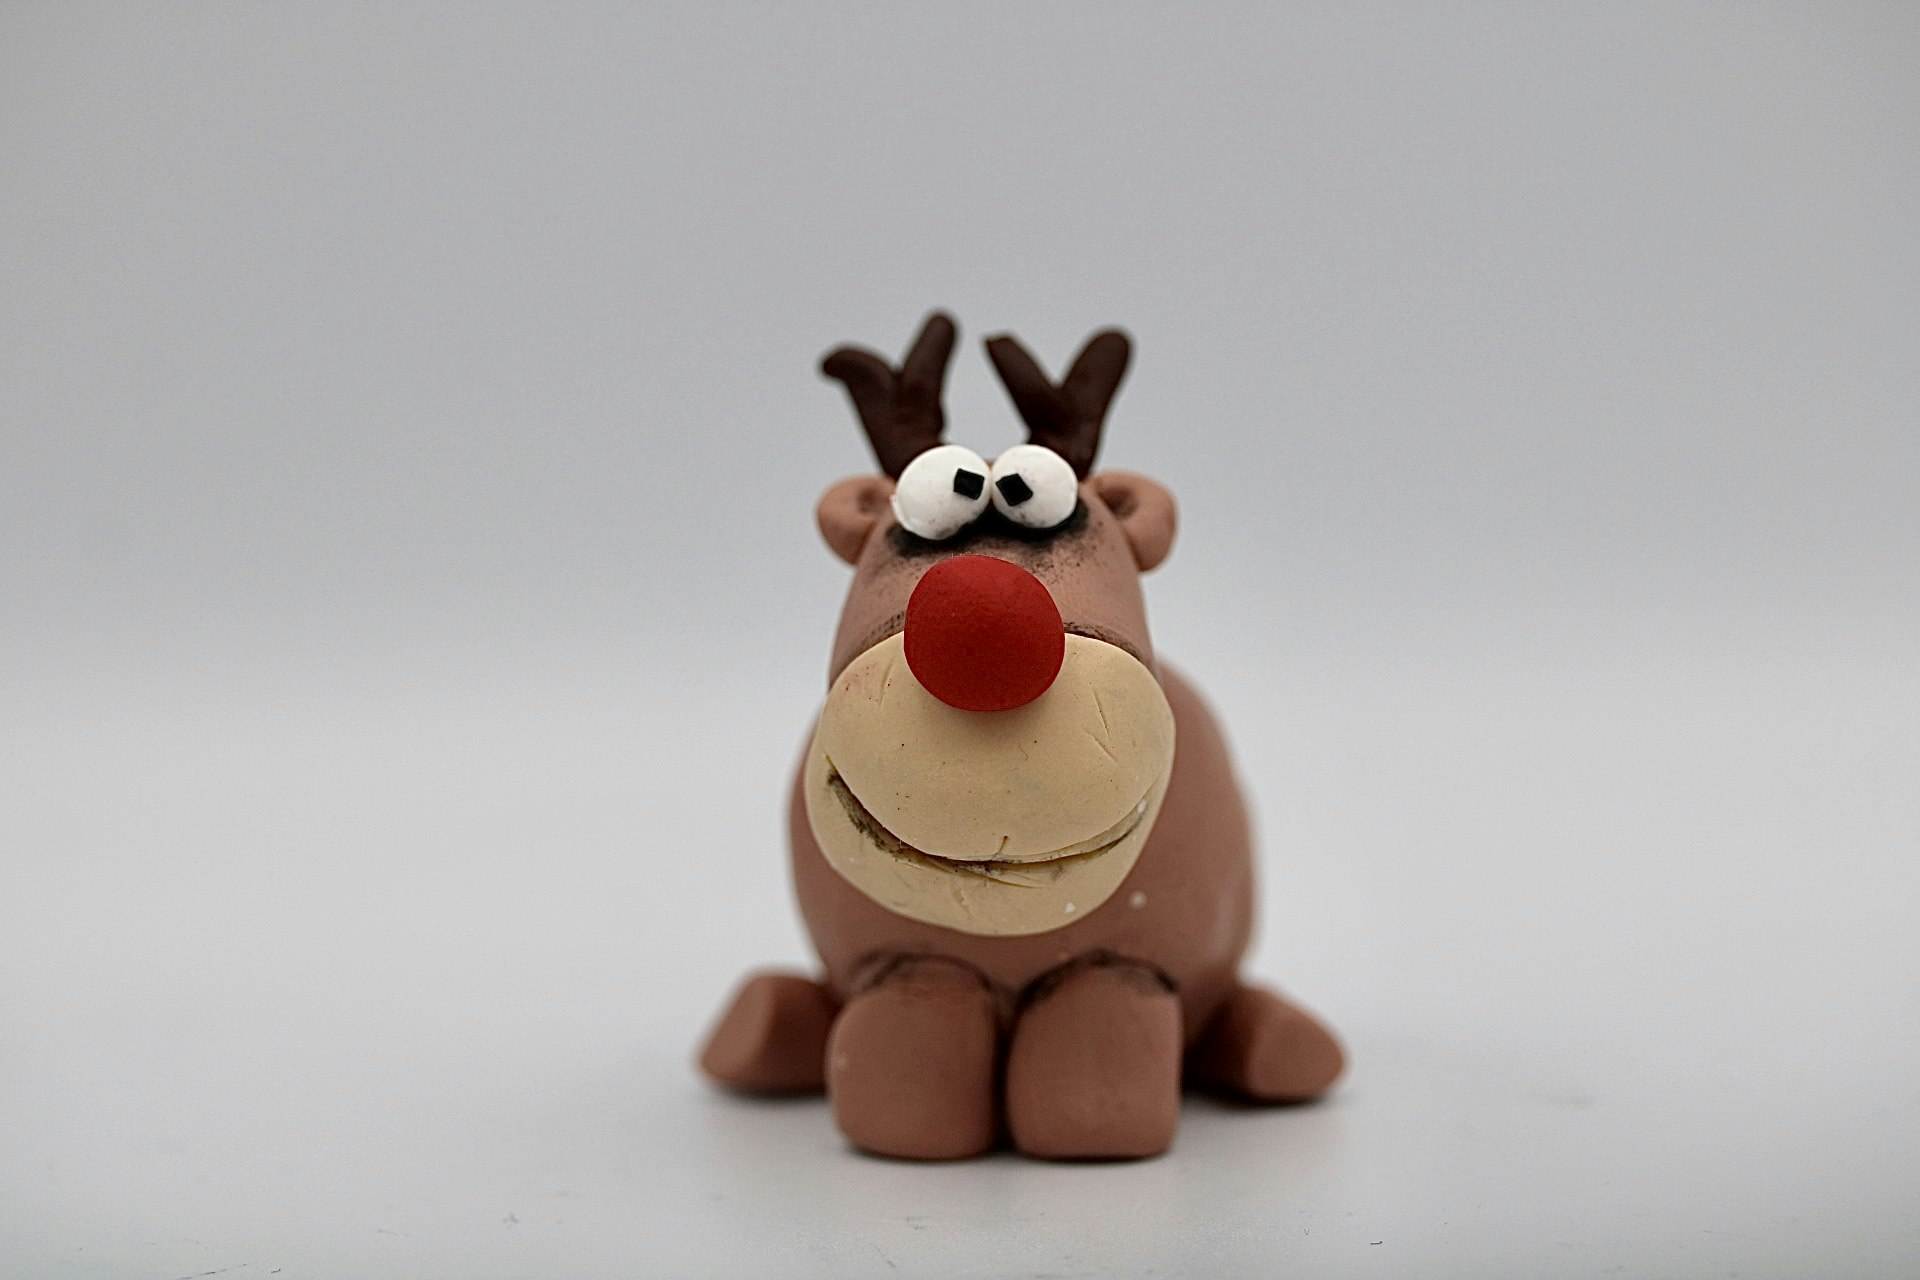 Rudolf